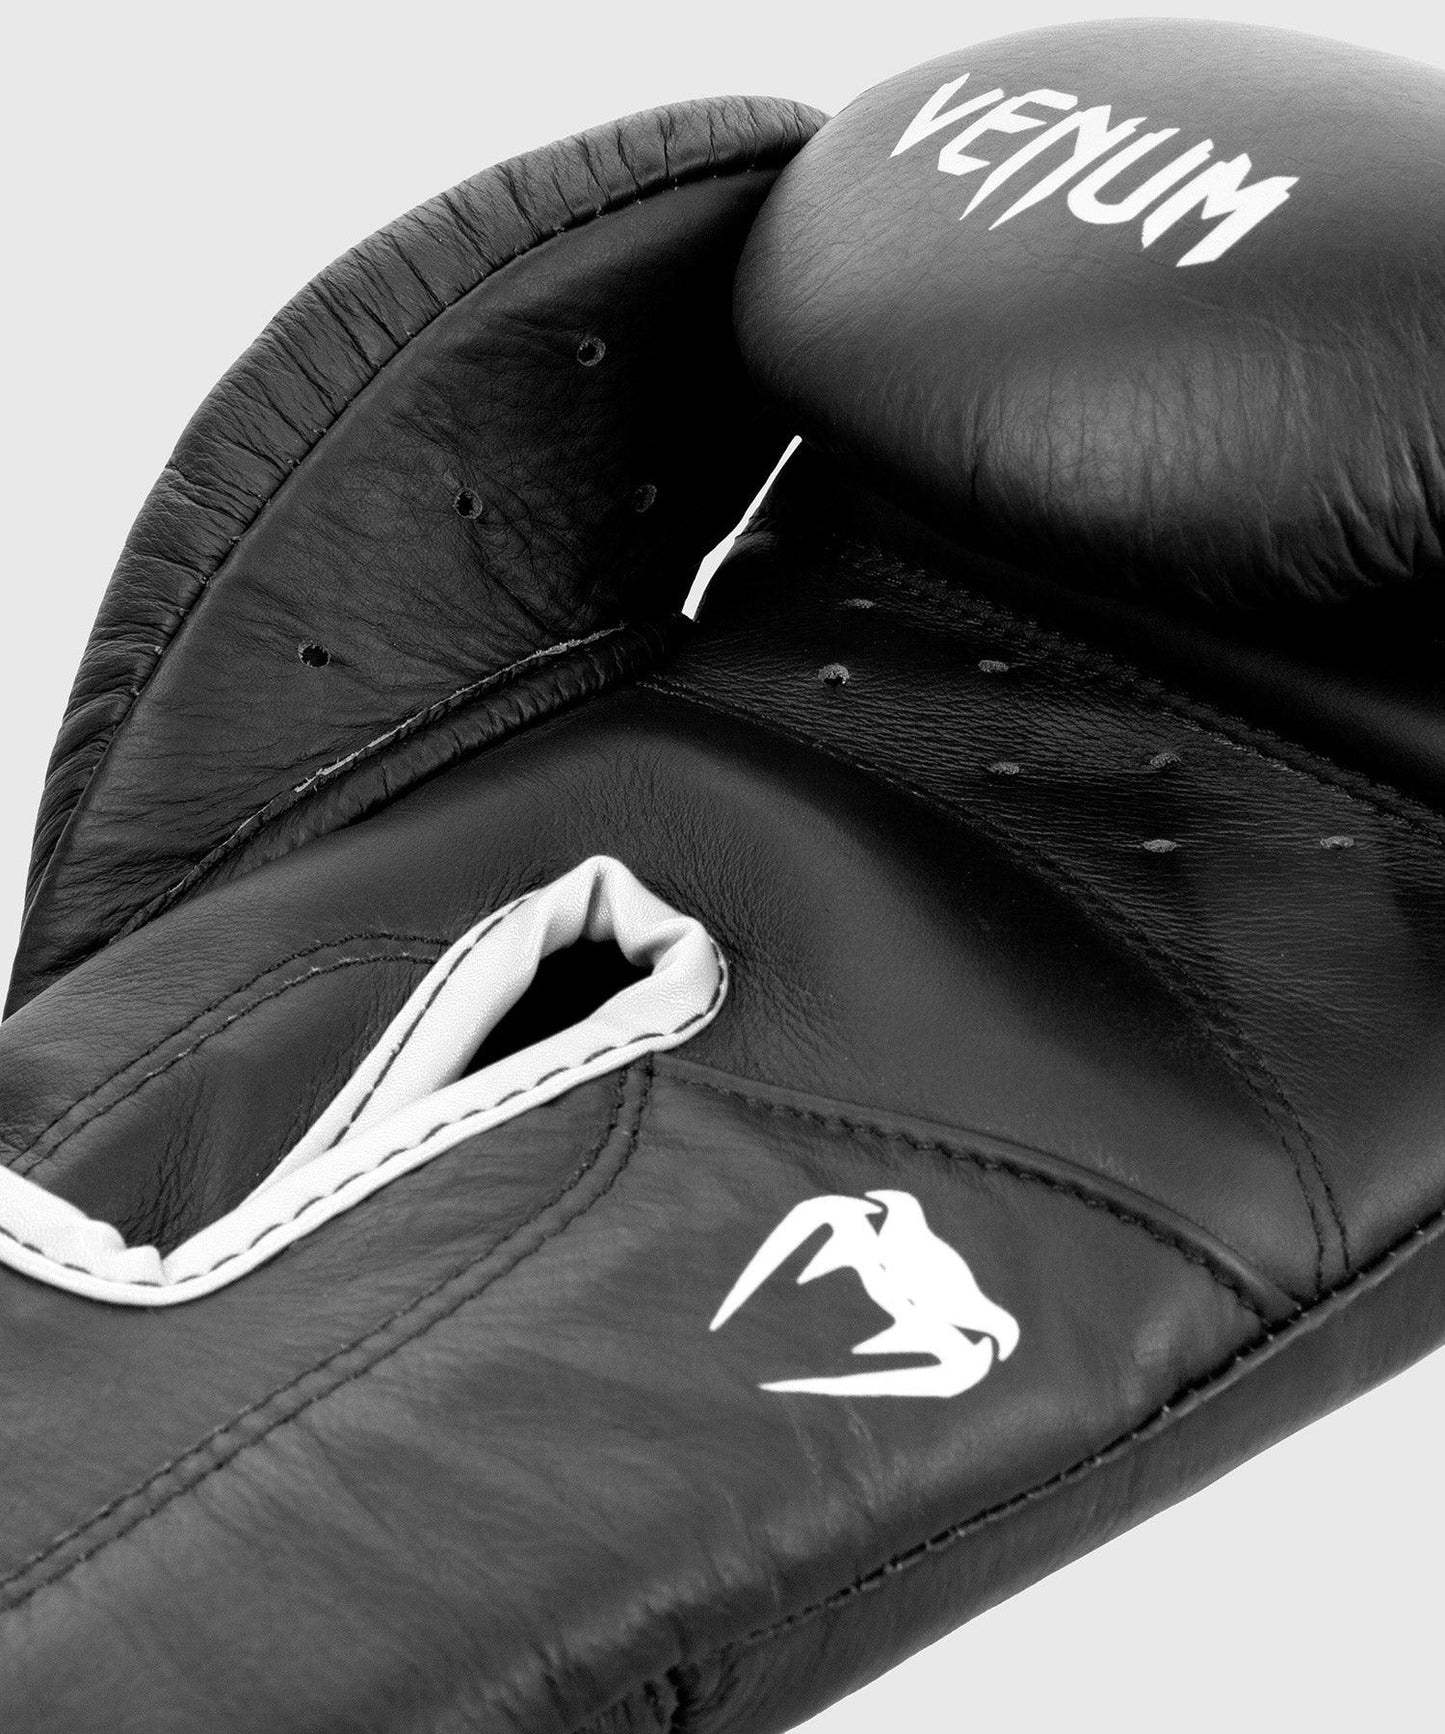 Venum Giant 2.0 Pro Boxing Gloves Velcro - Black/White Picture 5